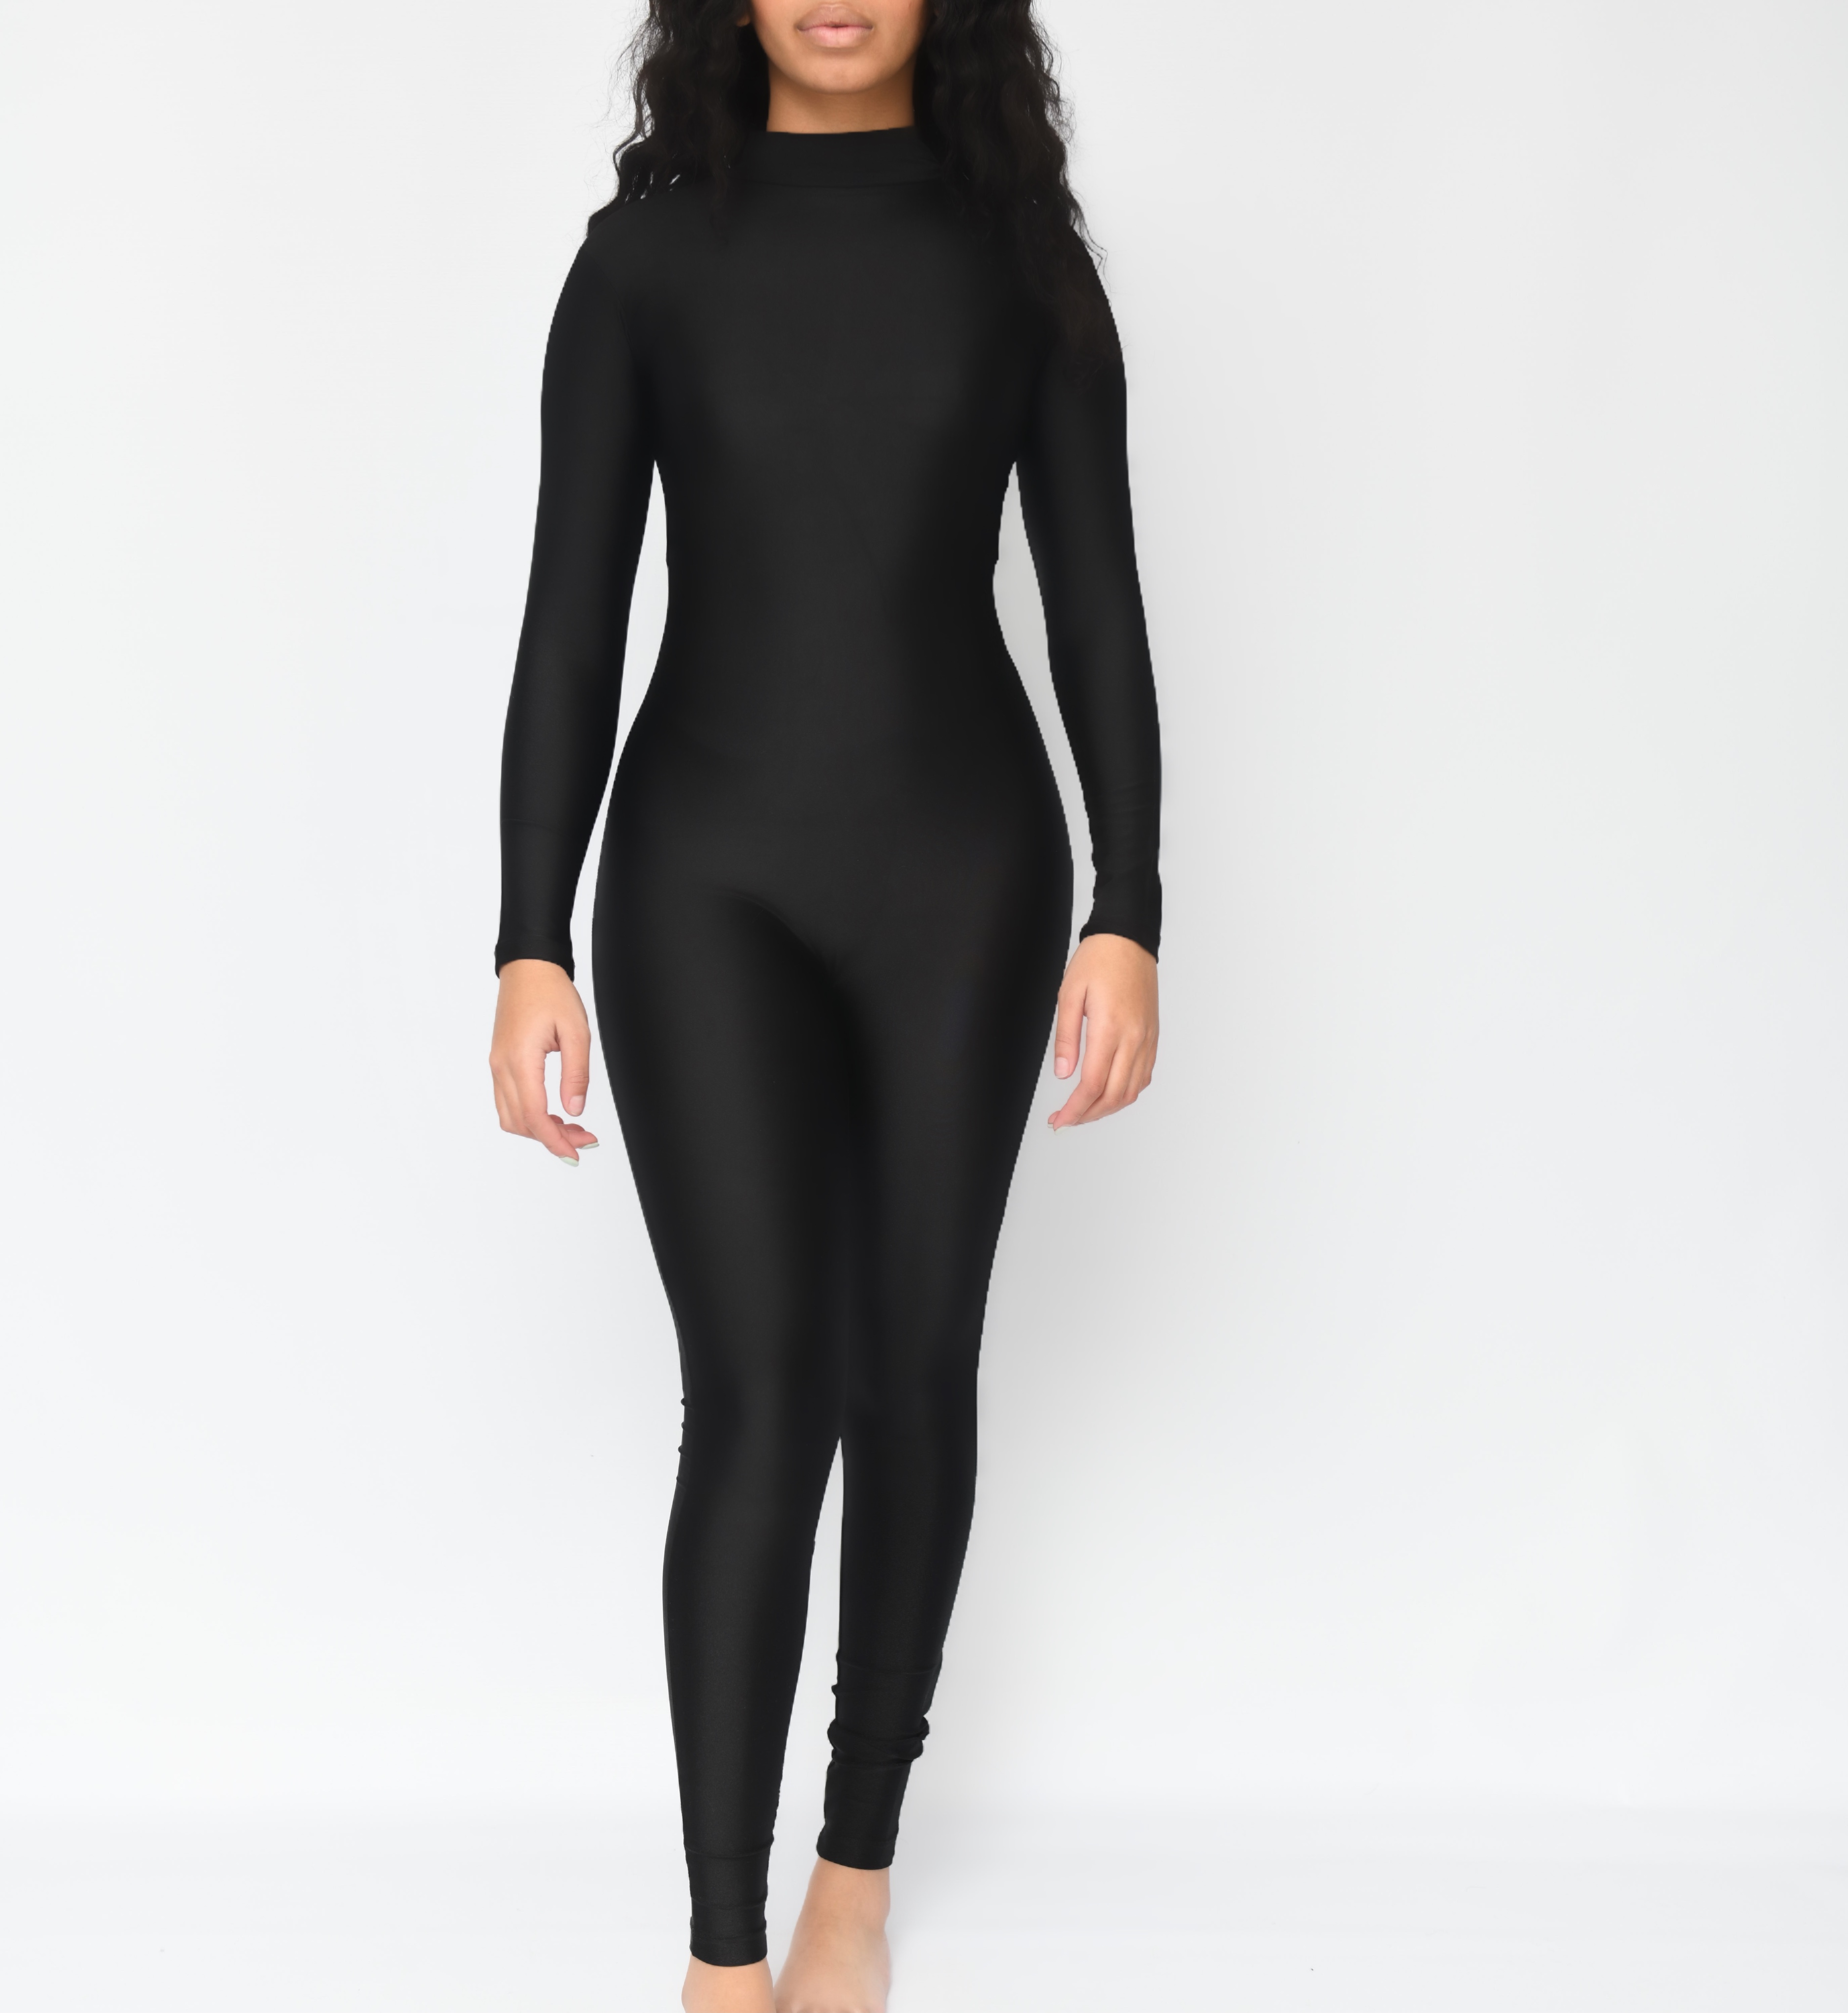 Fashionnever -Best Selling Skinny Full Length Mock Neck Unitard Long Sleeve Jumpsuit, Fabric, Slight Stretch    Model Wear UK 6 / Xtra Small